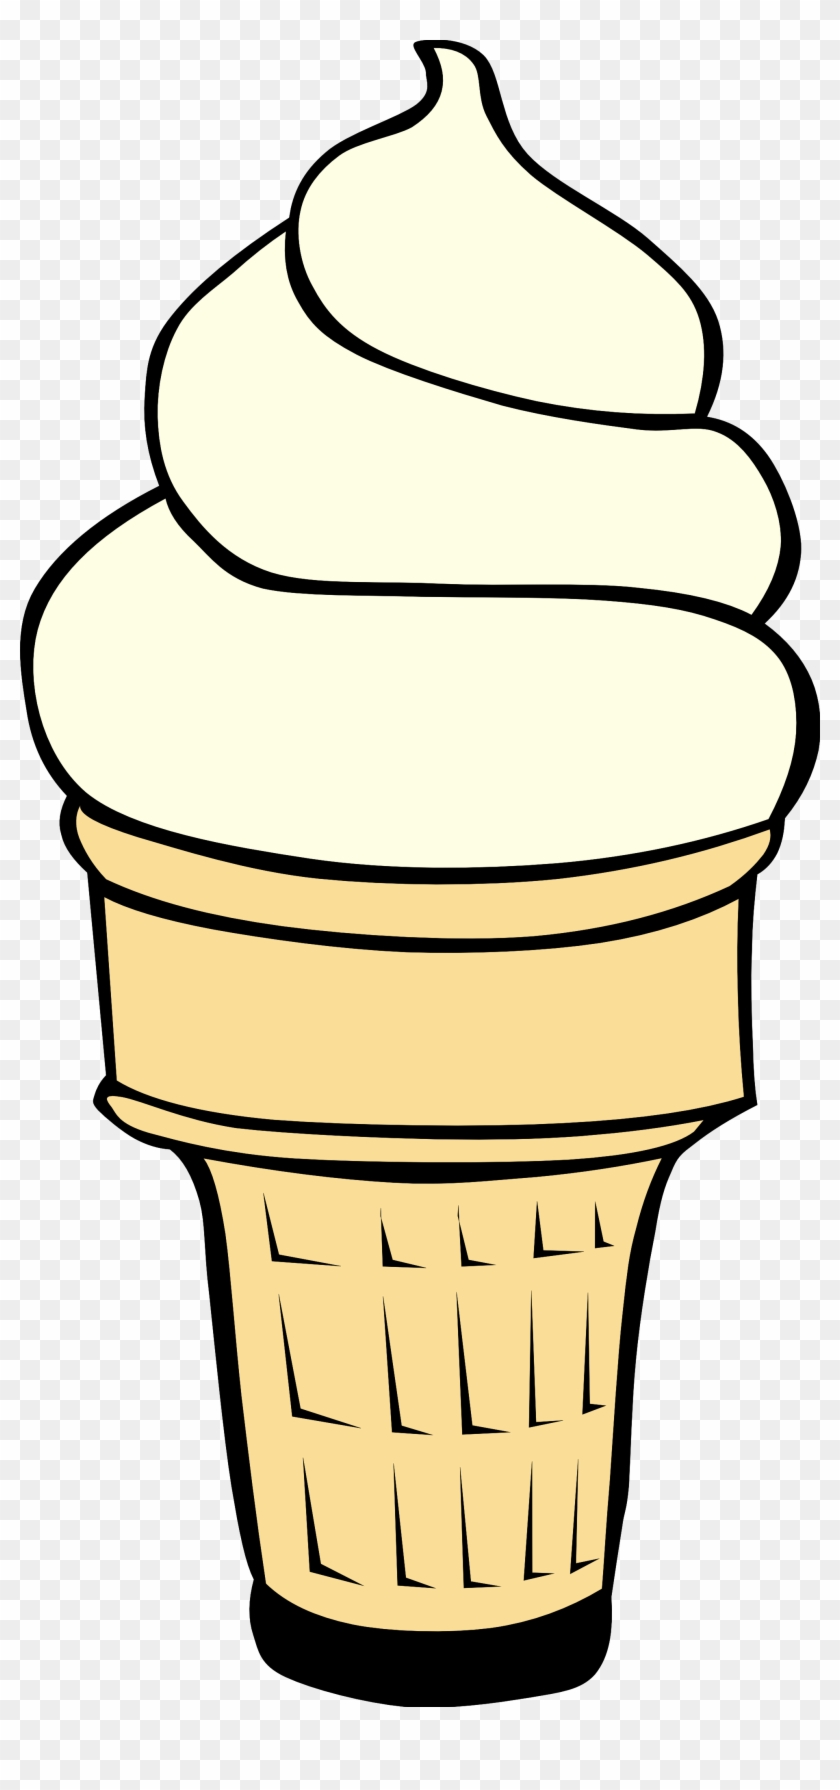 Clipart Ice Cream - Ice Cream Cone Clip Art #48395